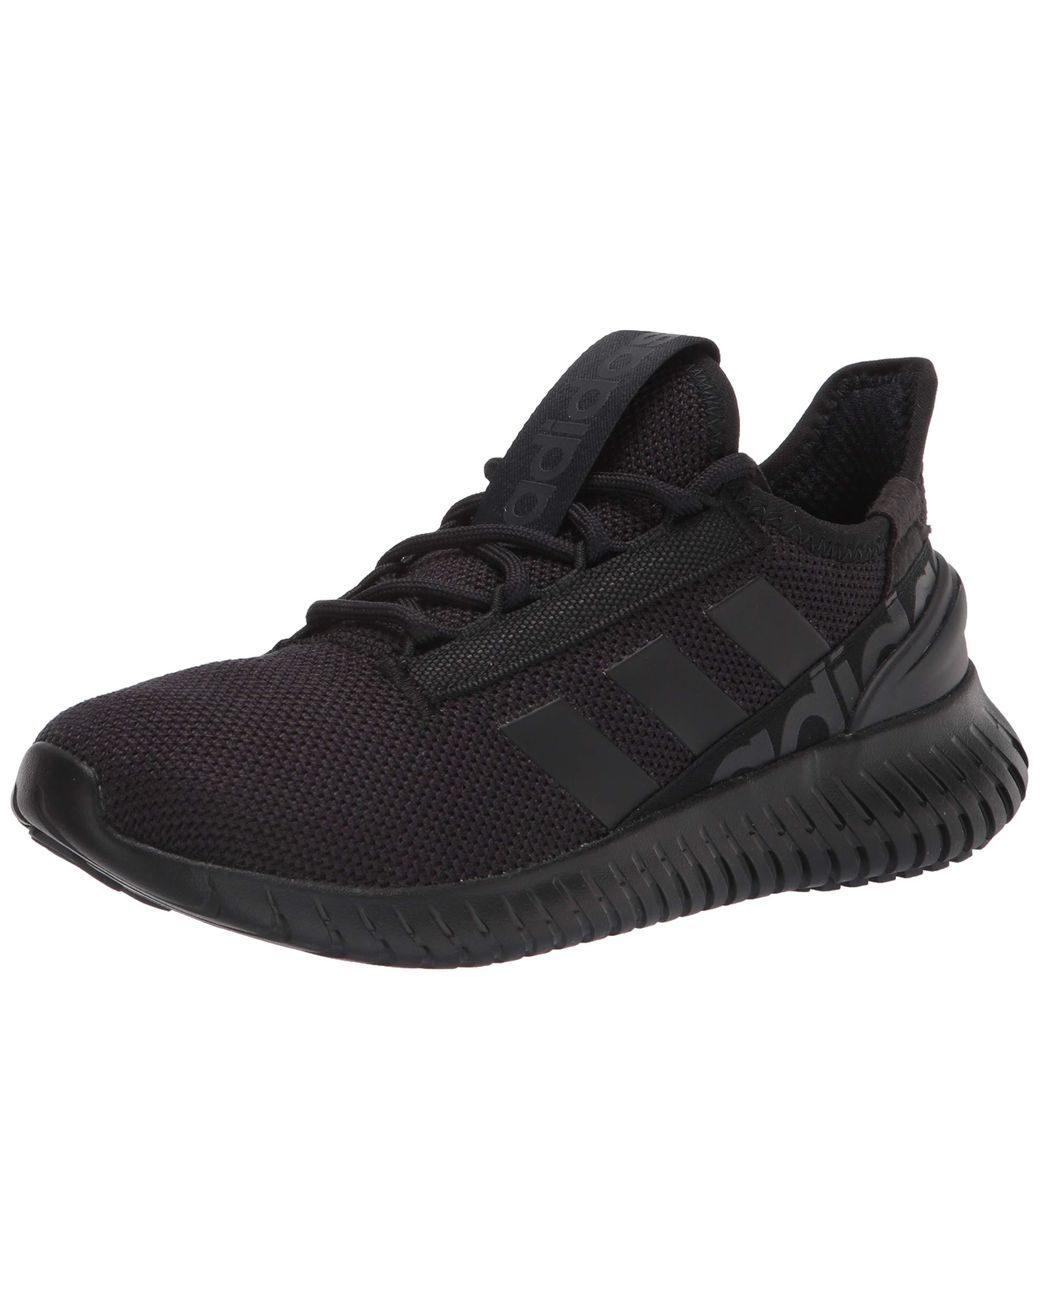 adidas Lace Kaptir 2.0 Running Shoes in Black/White/Grey (Black) for ...